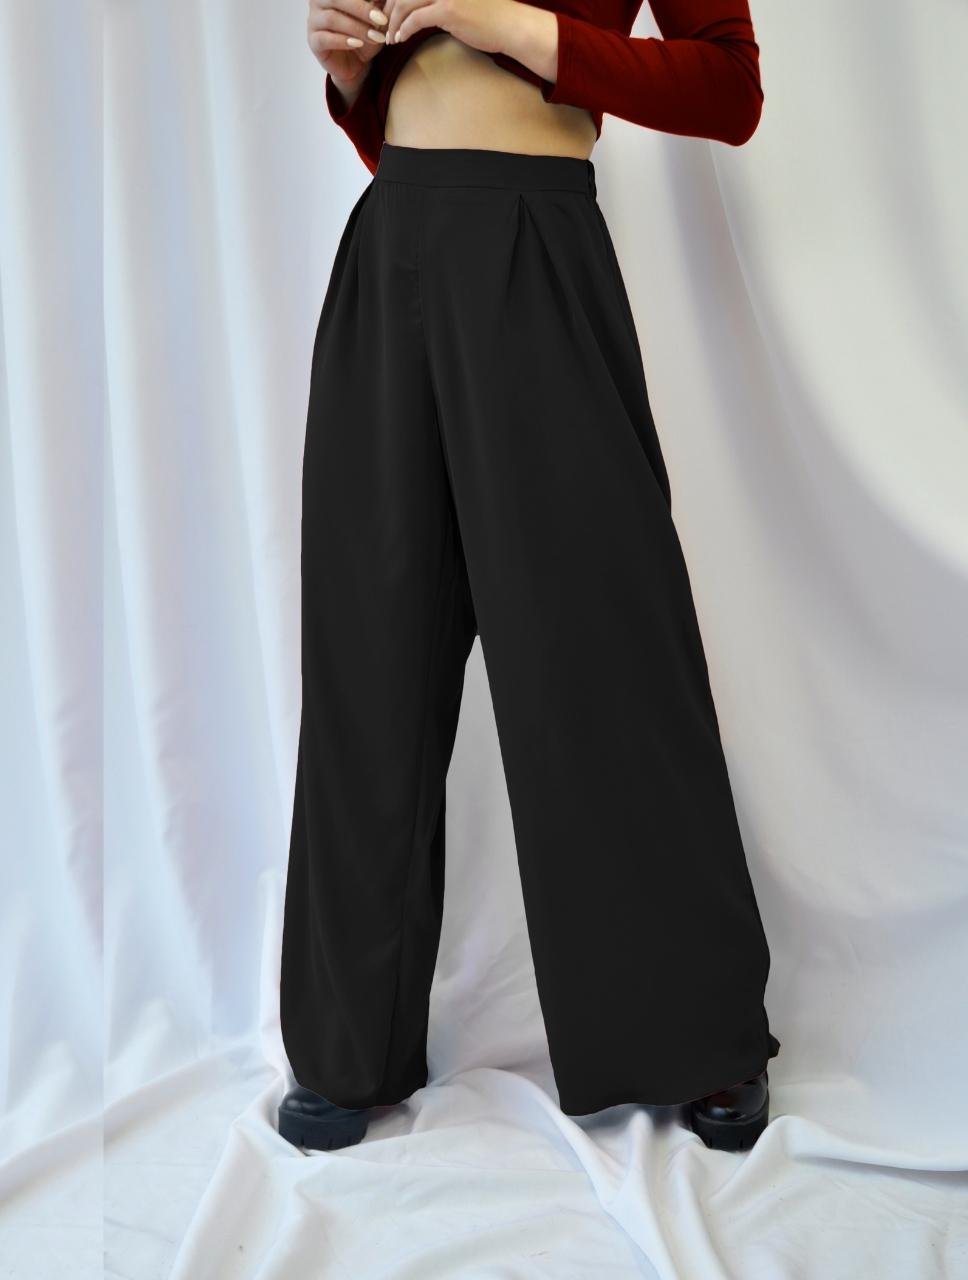 Pantalón para Mujer Negro Tipo Palazzo Tiro Alto - Alexia Negro